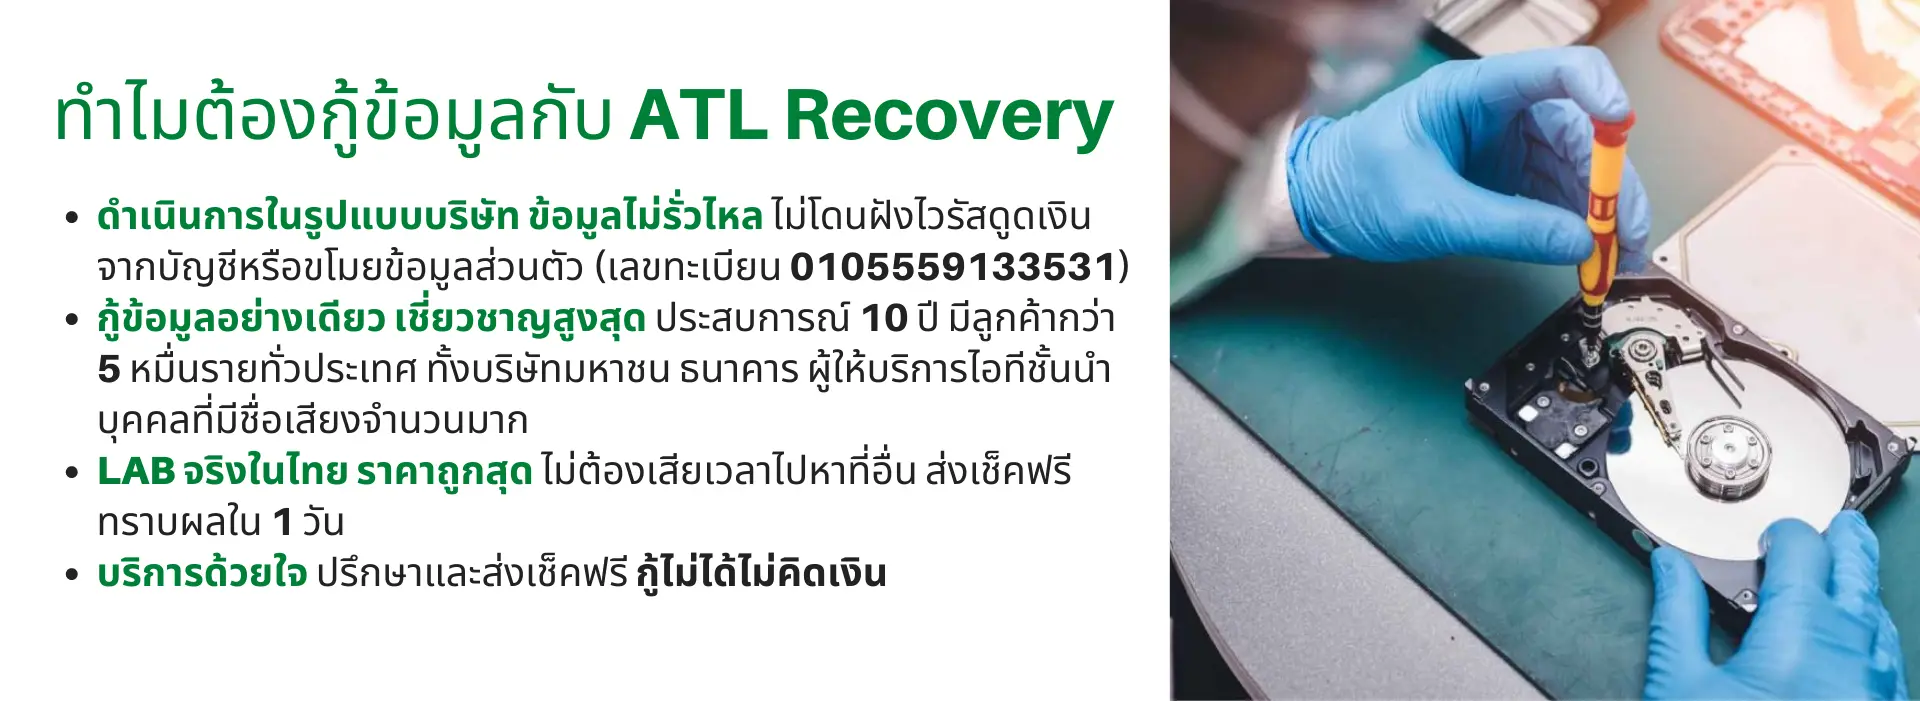 ATL Data Recovery กู้ข้อมูล